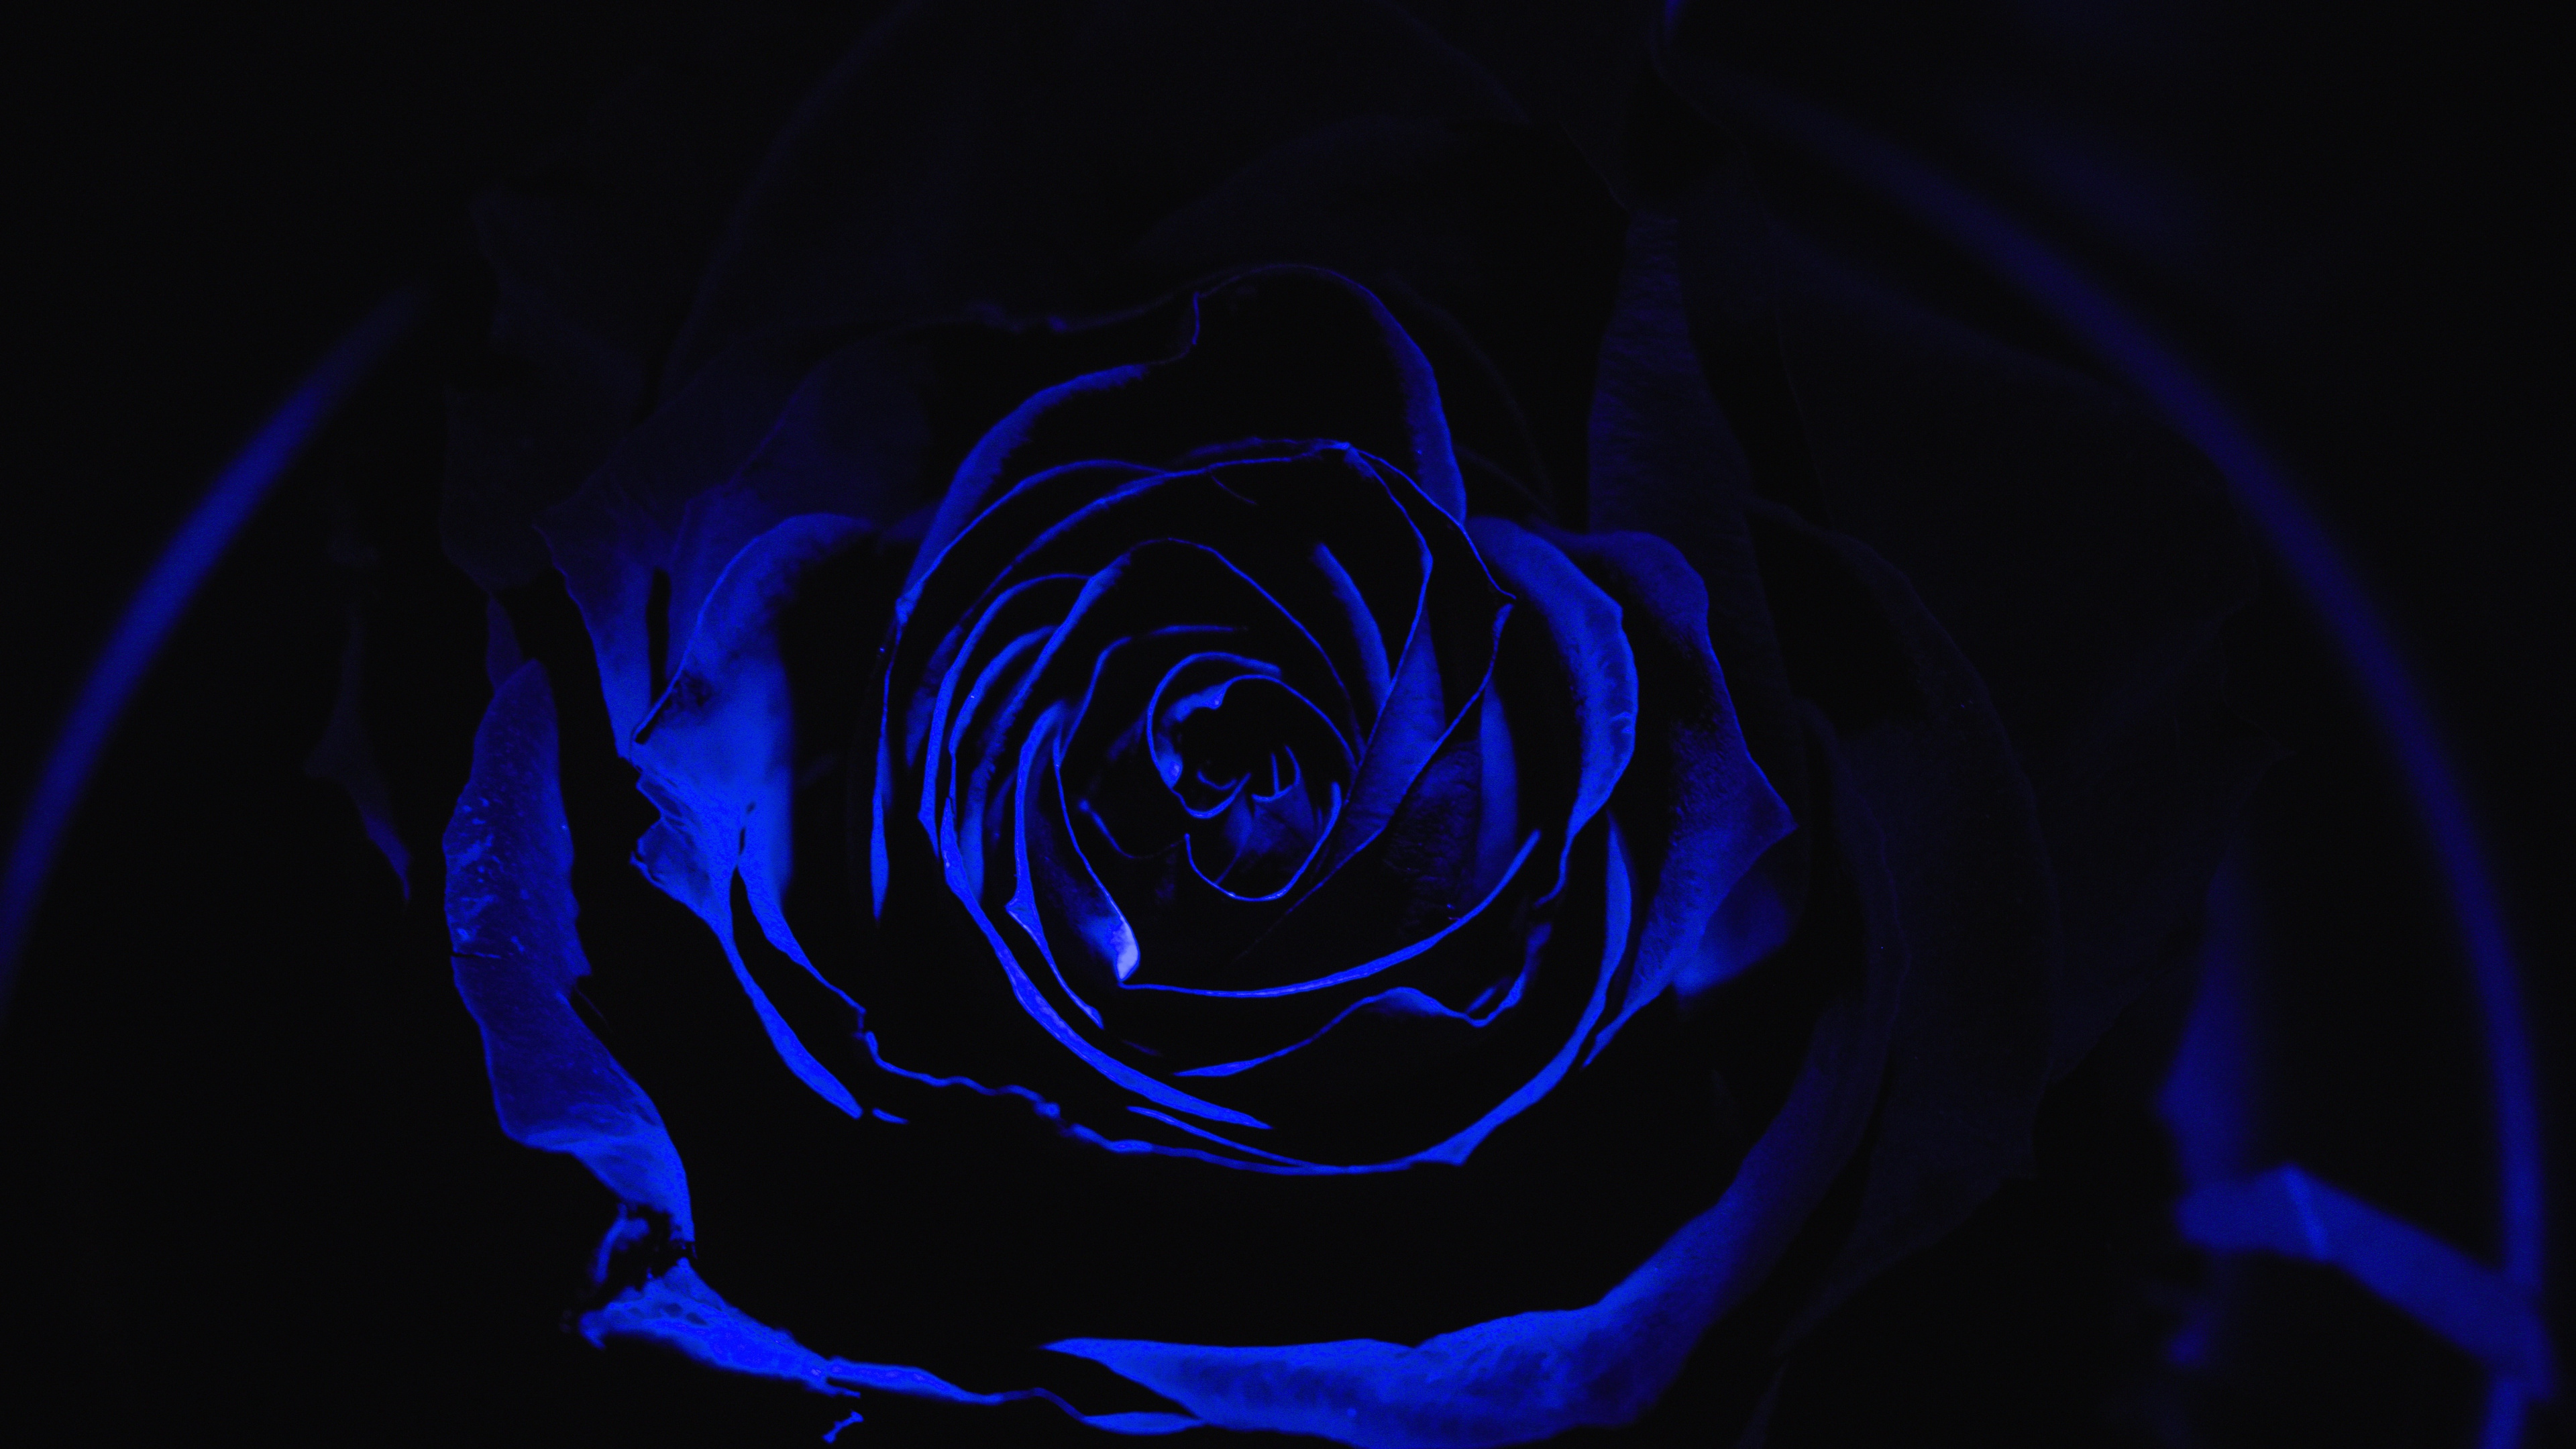 Blaue Rose in Nahaufnahmen. Wallpaper in 3840x2160 Resolution